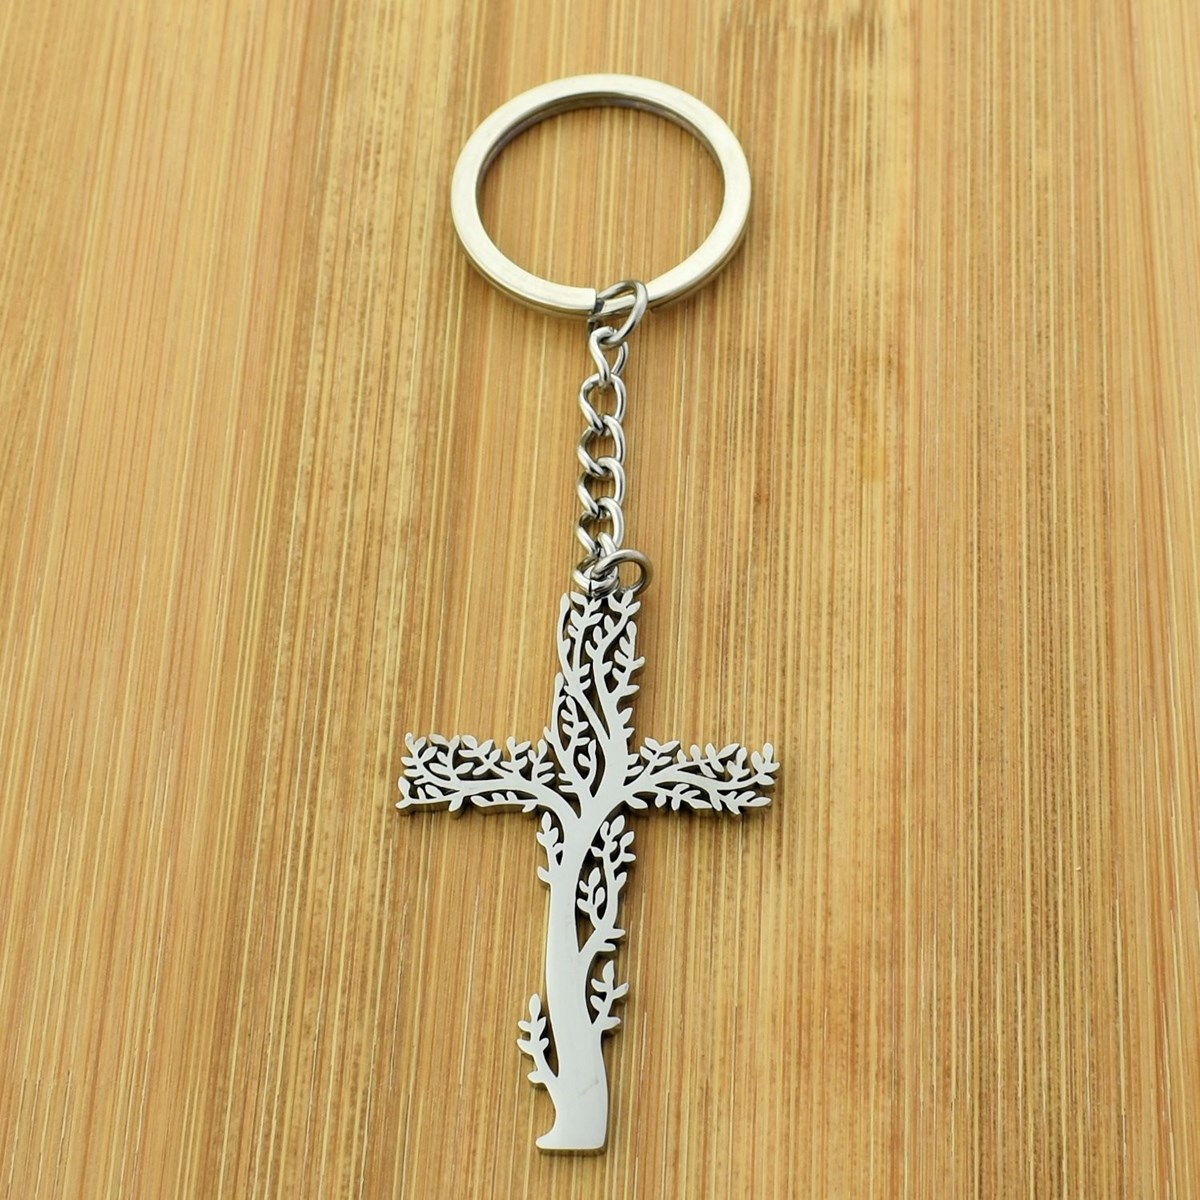 Porte-clés arbre de vie en forme de croix origami acier - vue 2